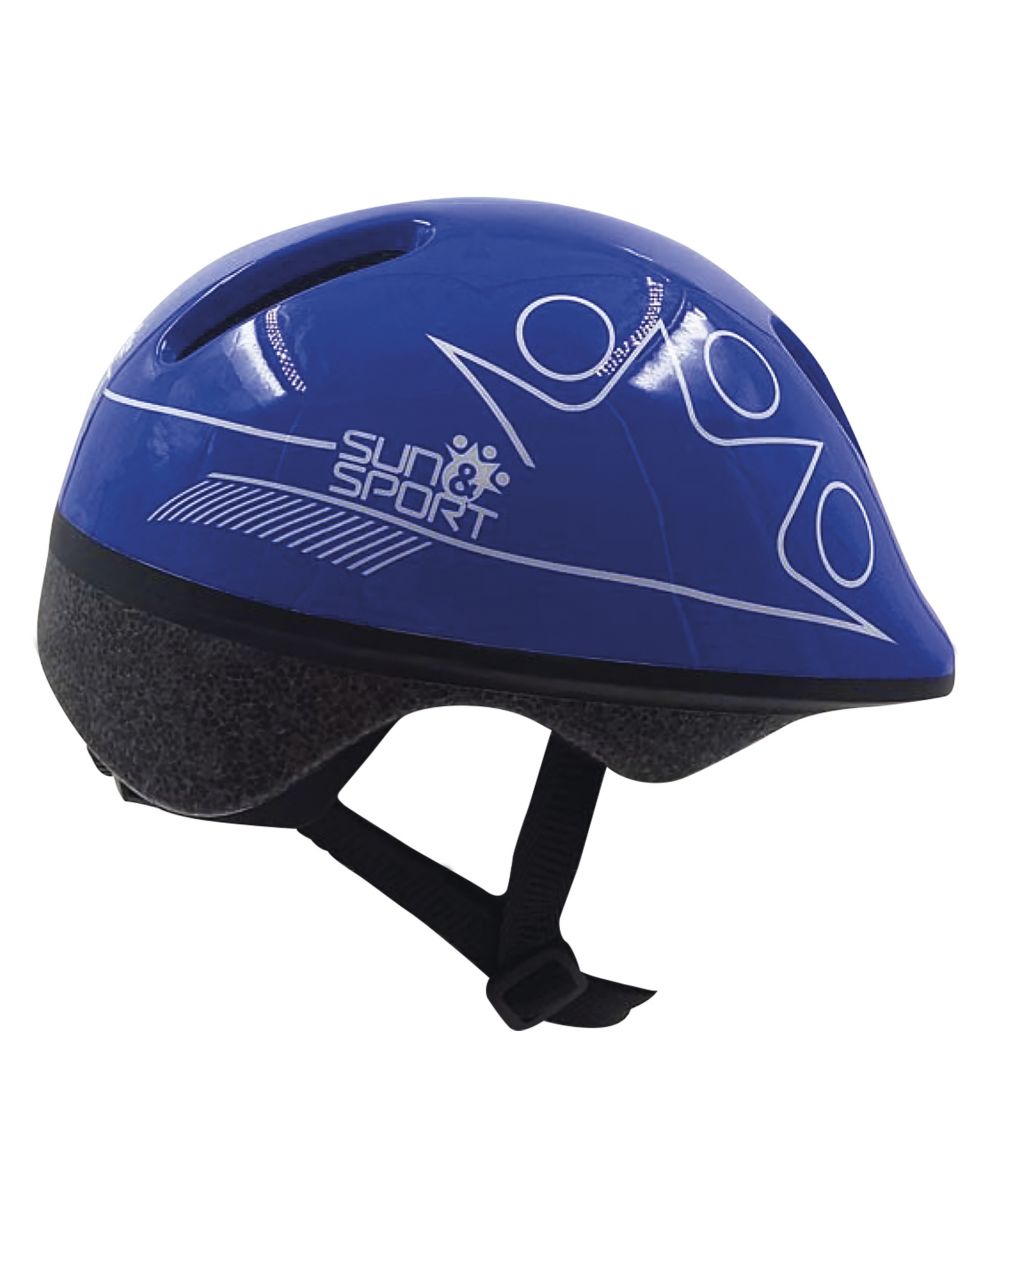 Sol e esporte - capacete de menino - Sun&Sport